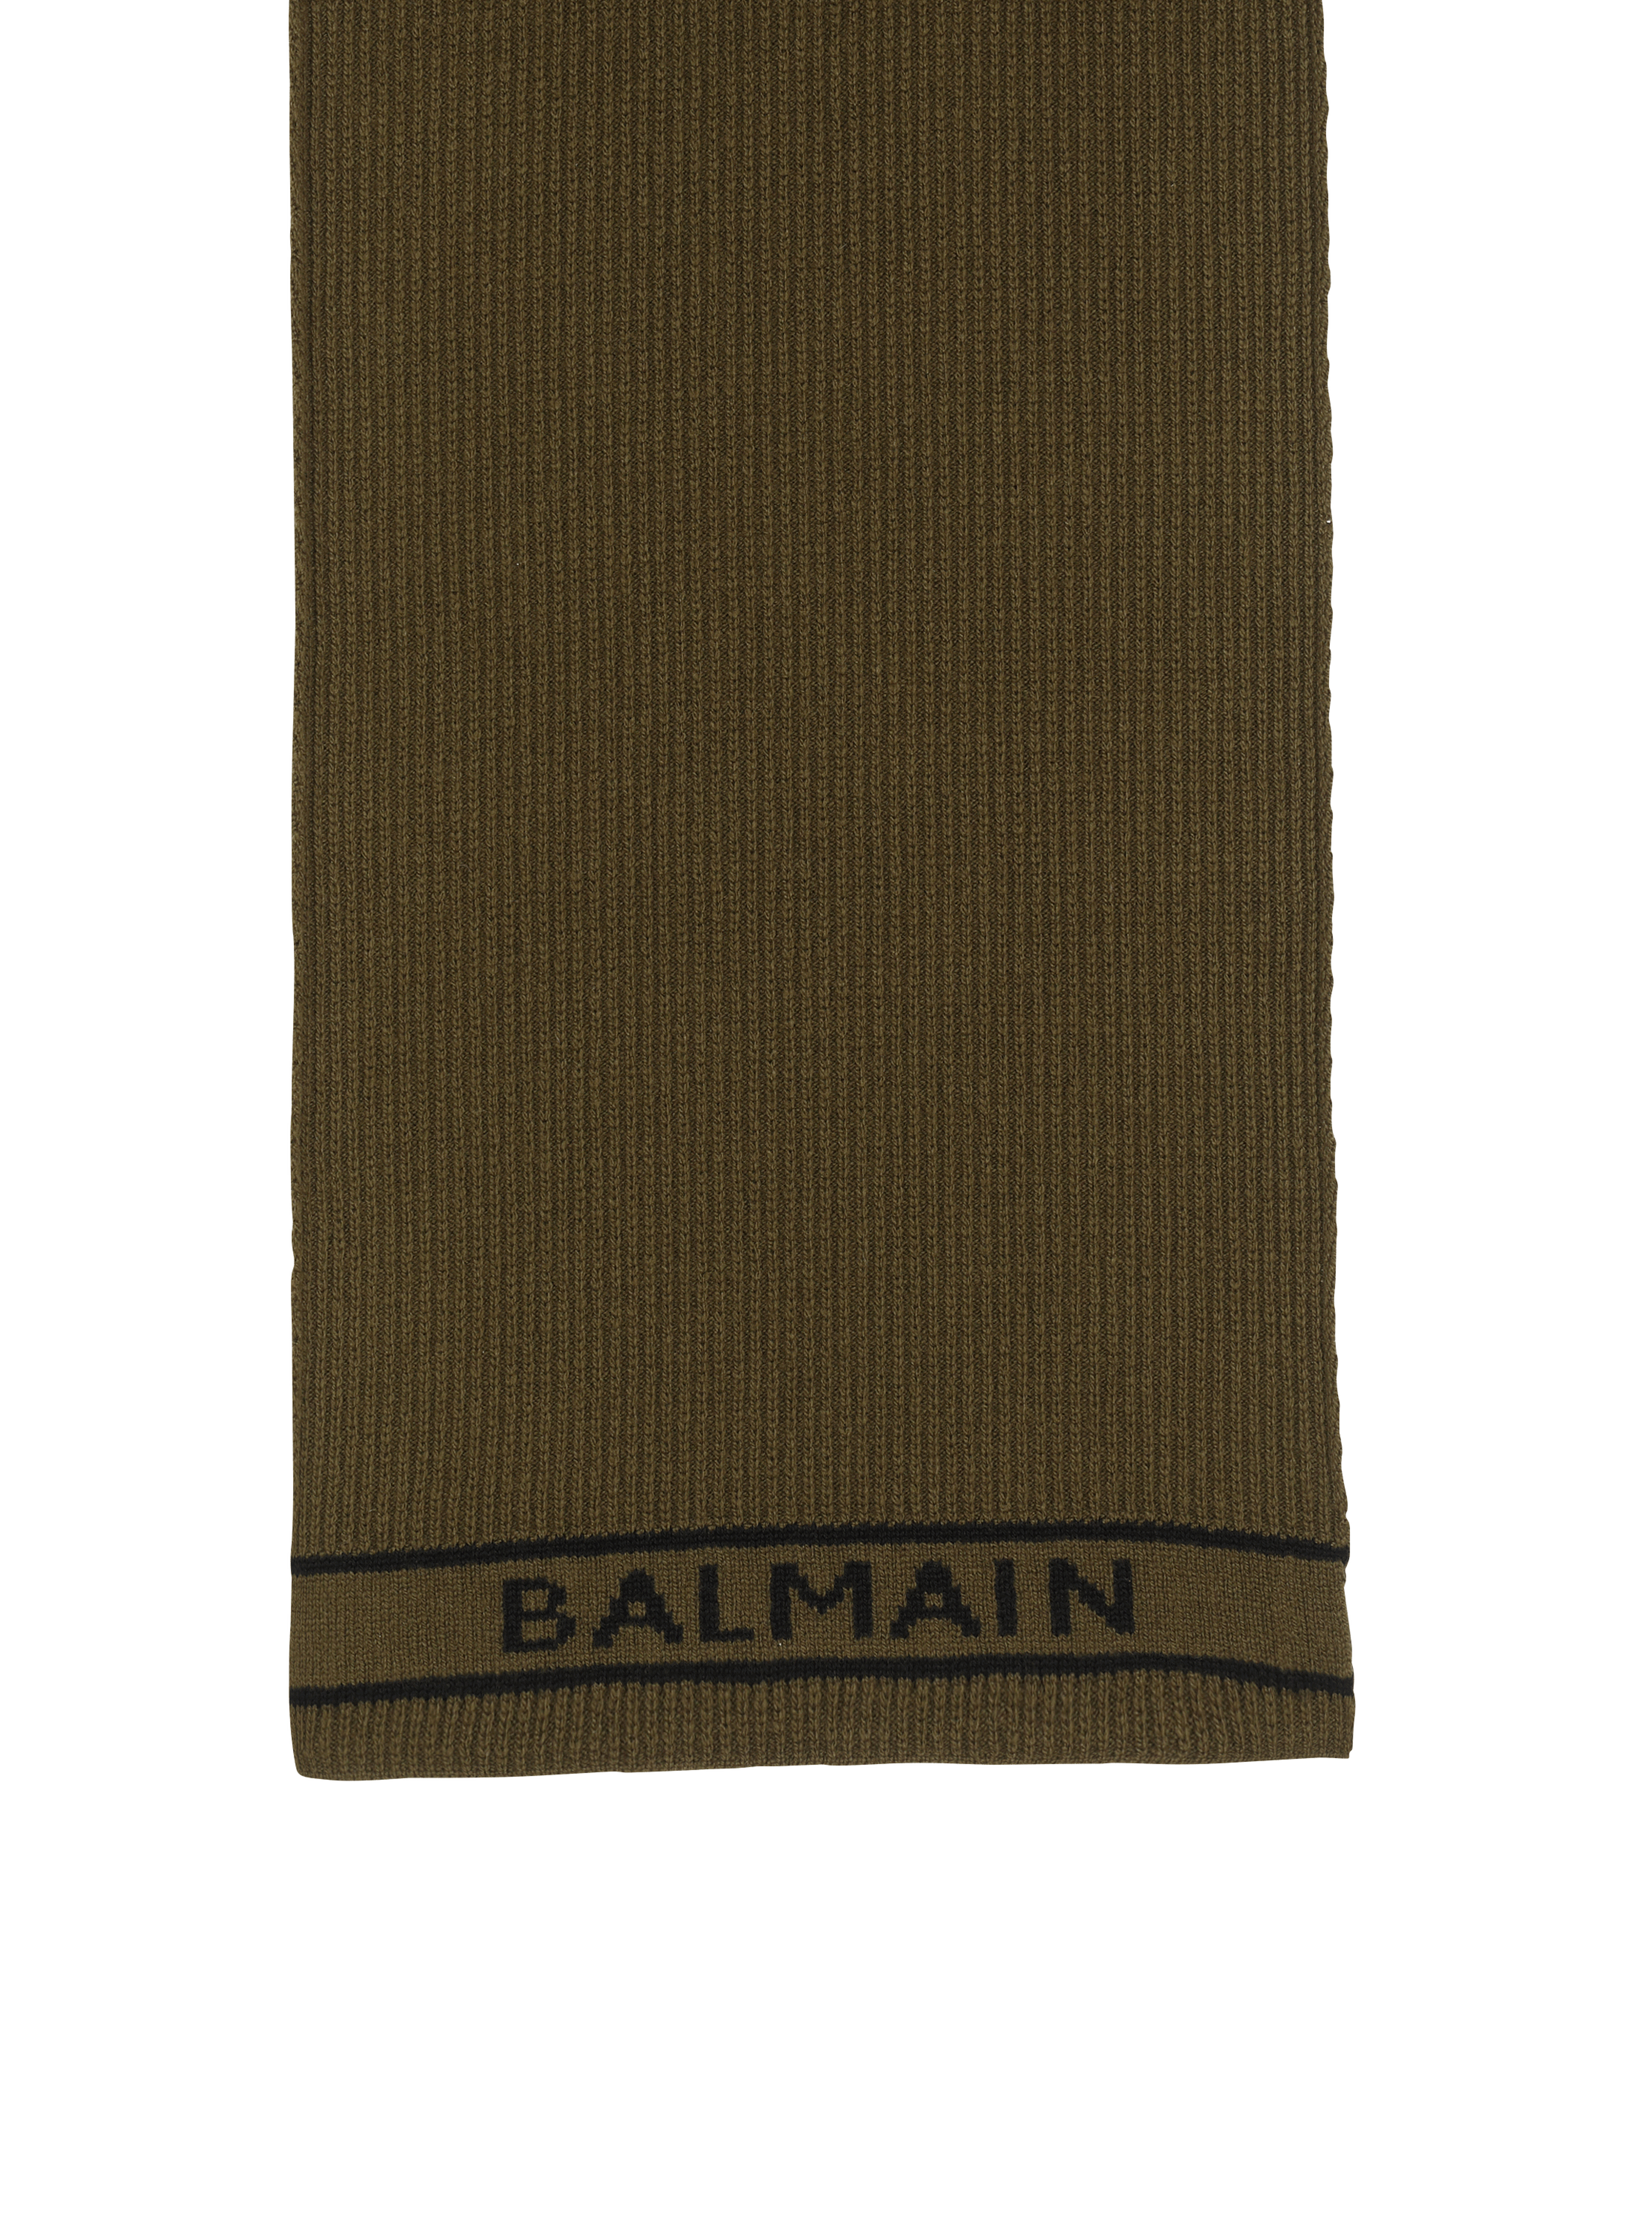 Balmain巴尔曼标志羊毛围巾, khaki